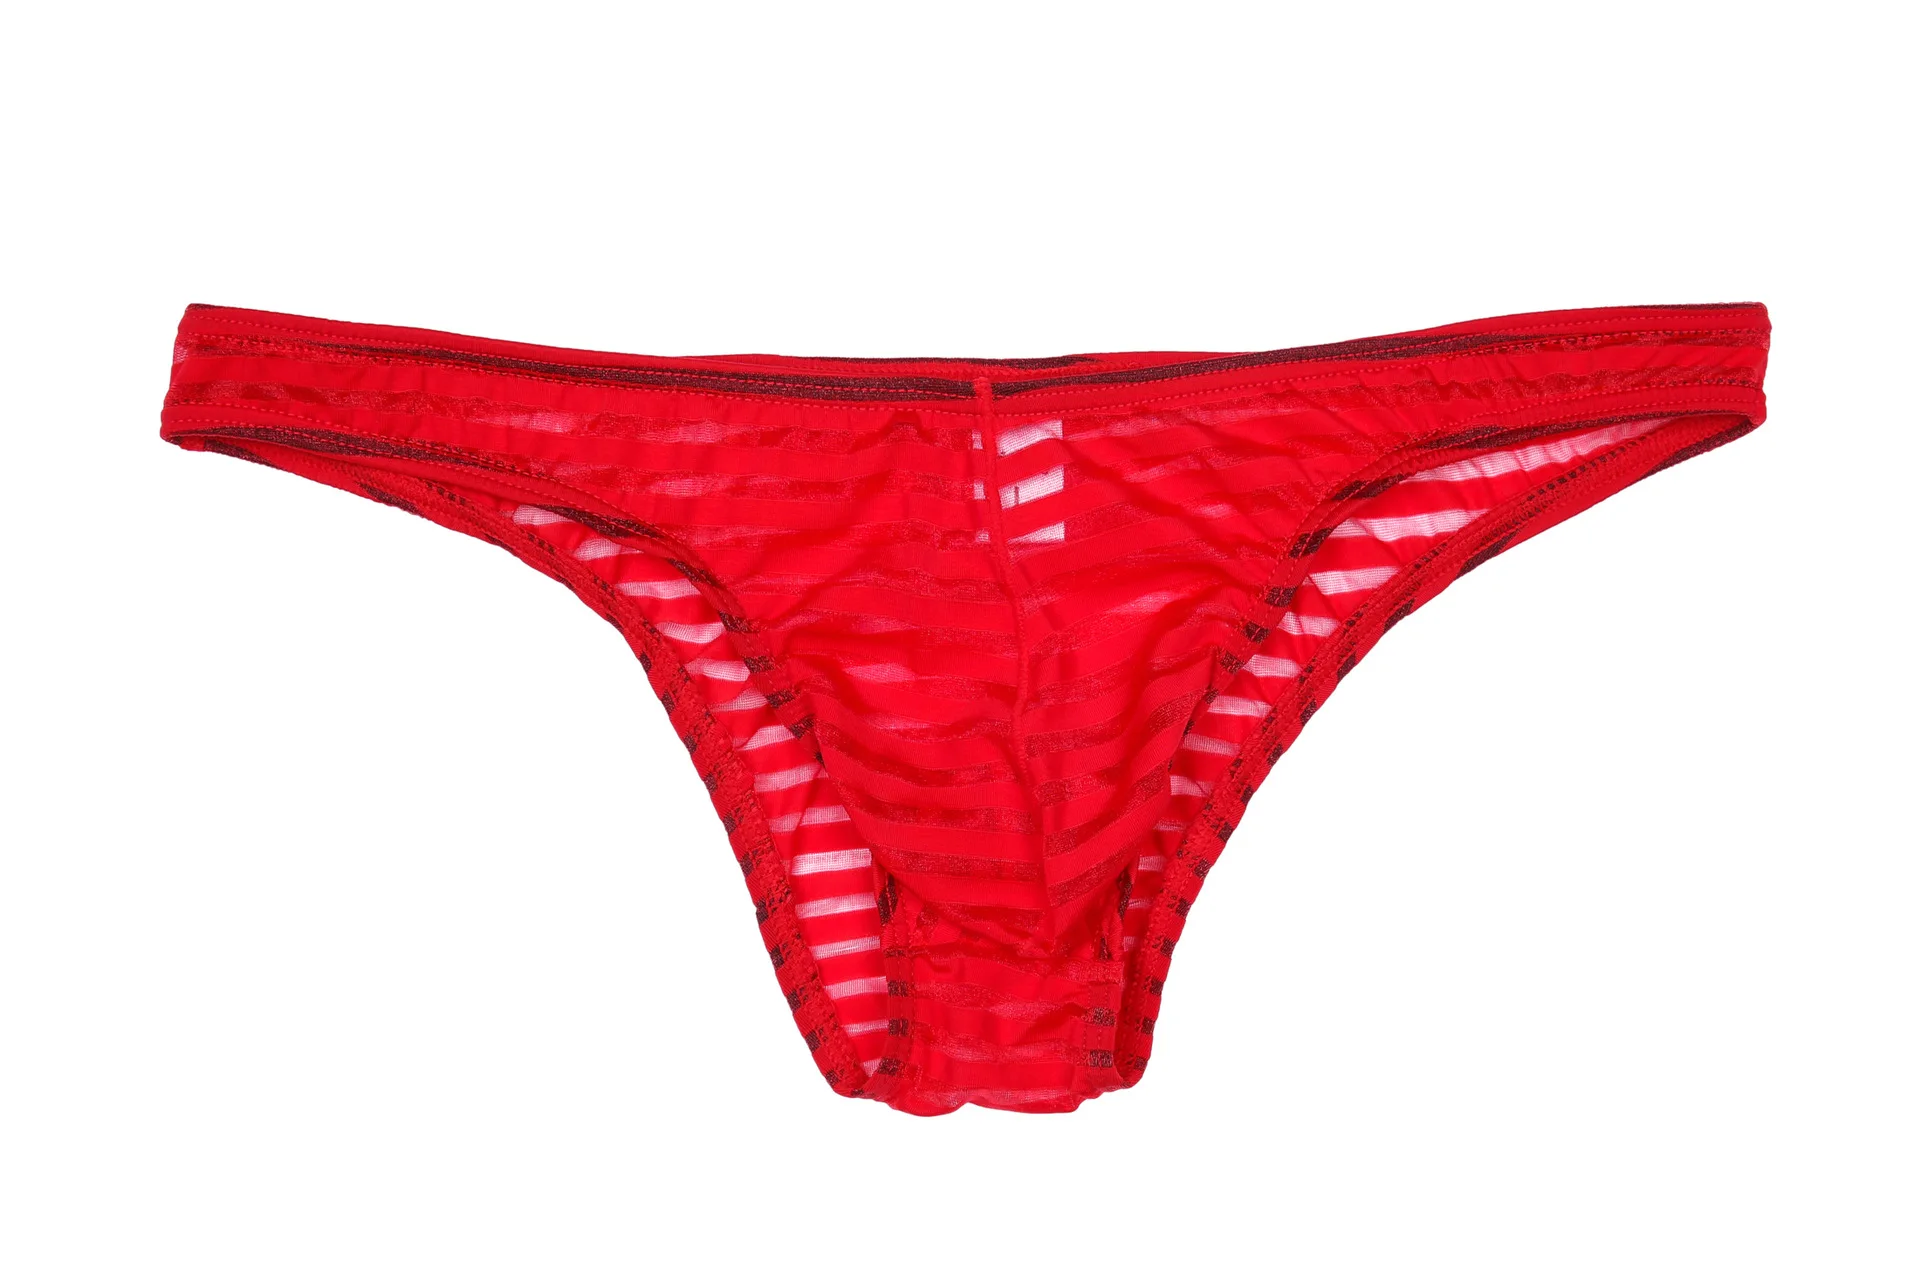 Men's Striped Briefs Mesh Translucent Low Waist U Convex Pants - Buy ...